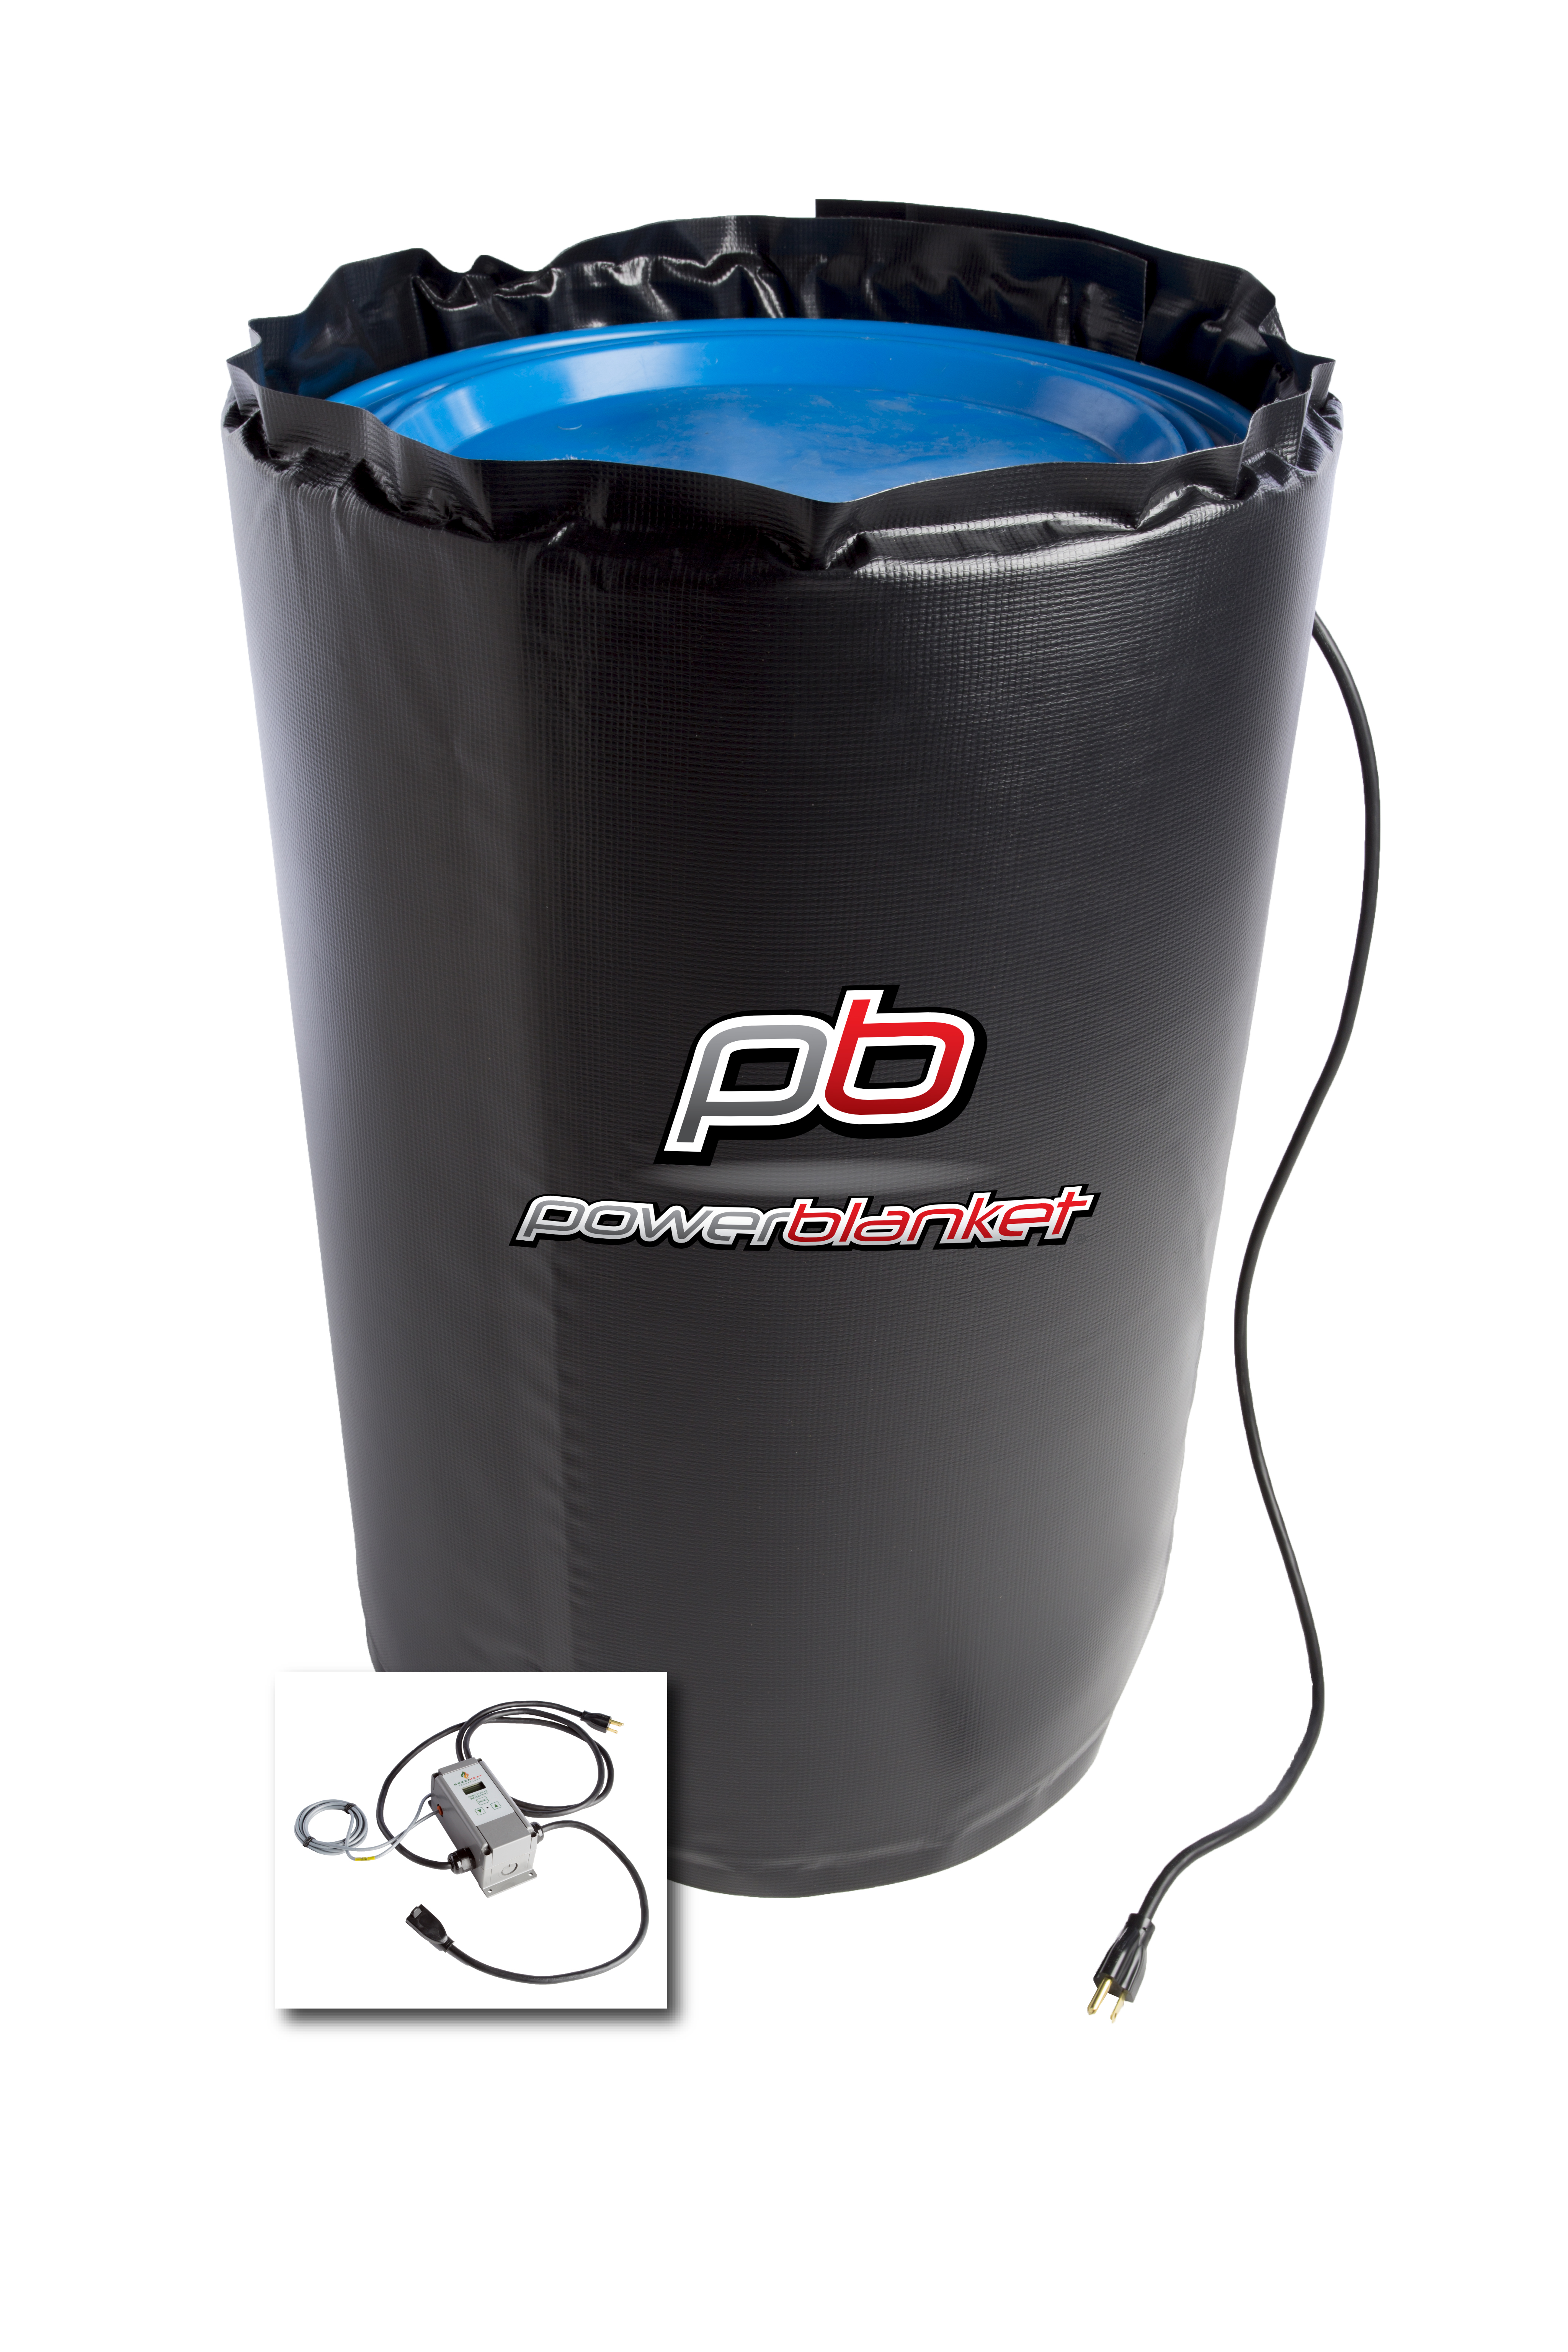 Powerblanket-Pro-30-gallon-drum-heater-small